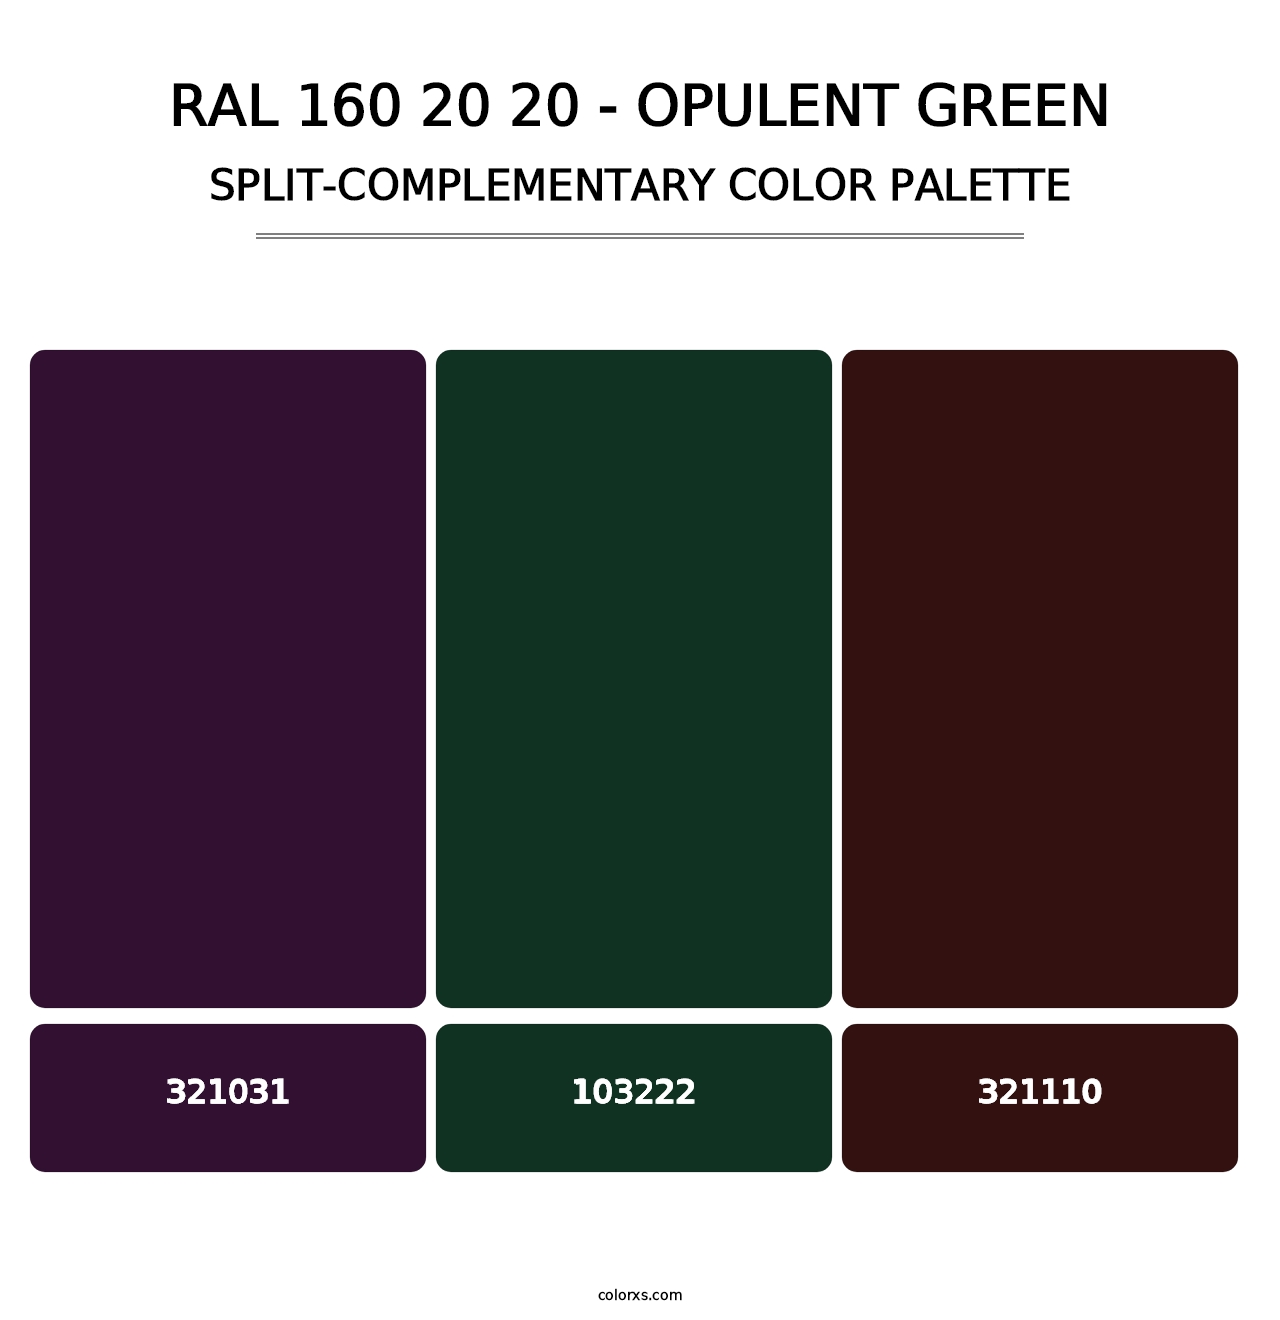 RAL 160 20 20 - Opulent Green - Split-Complementary Color Palette